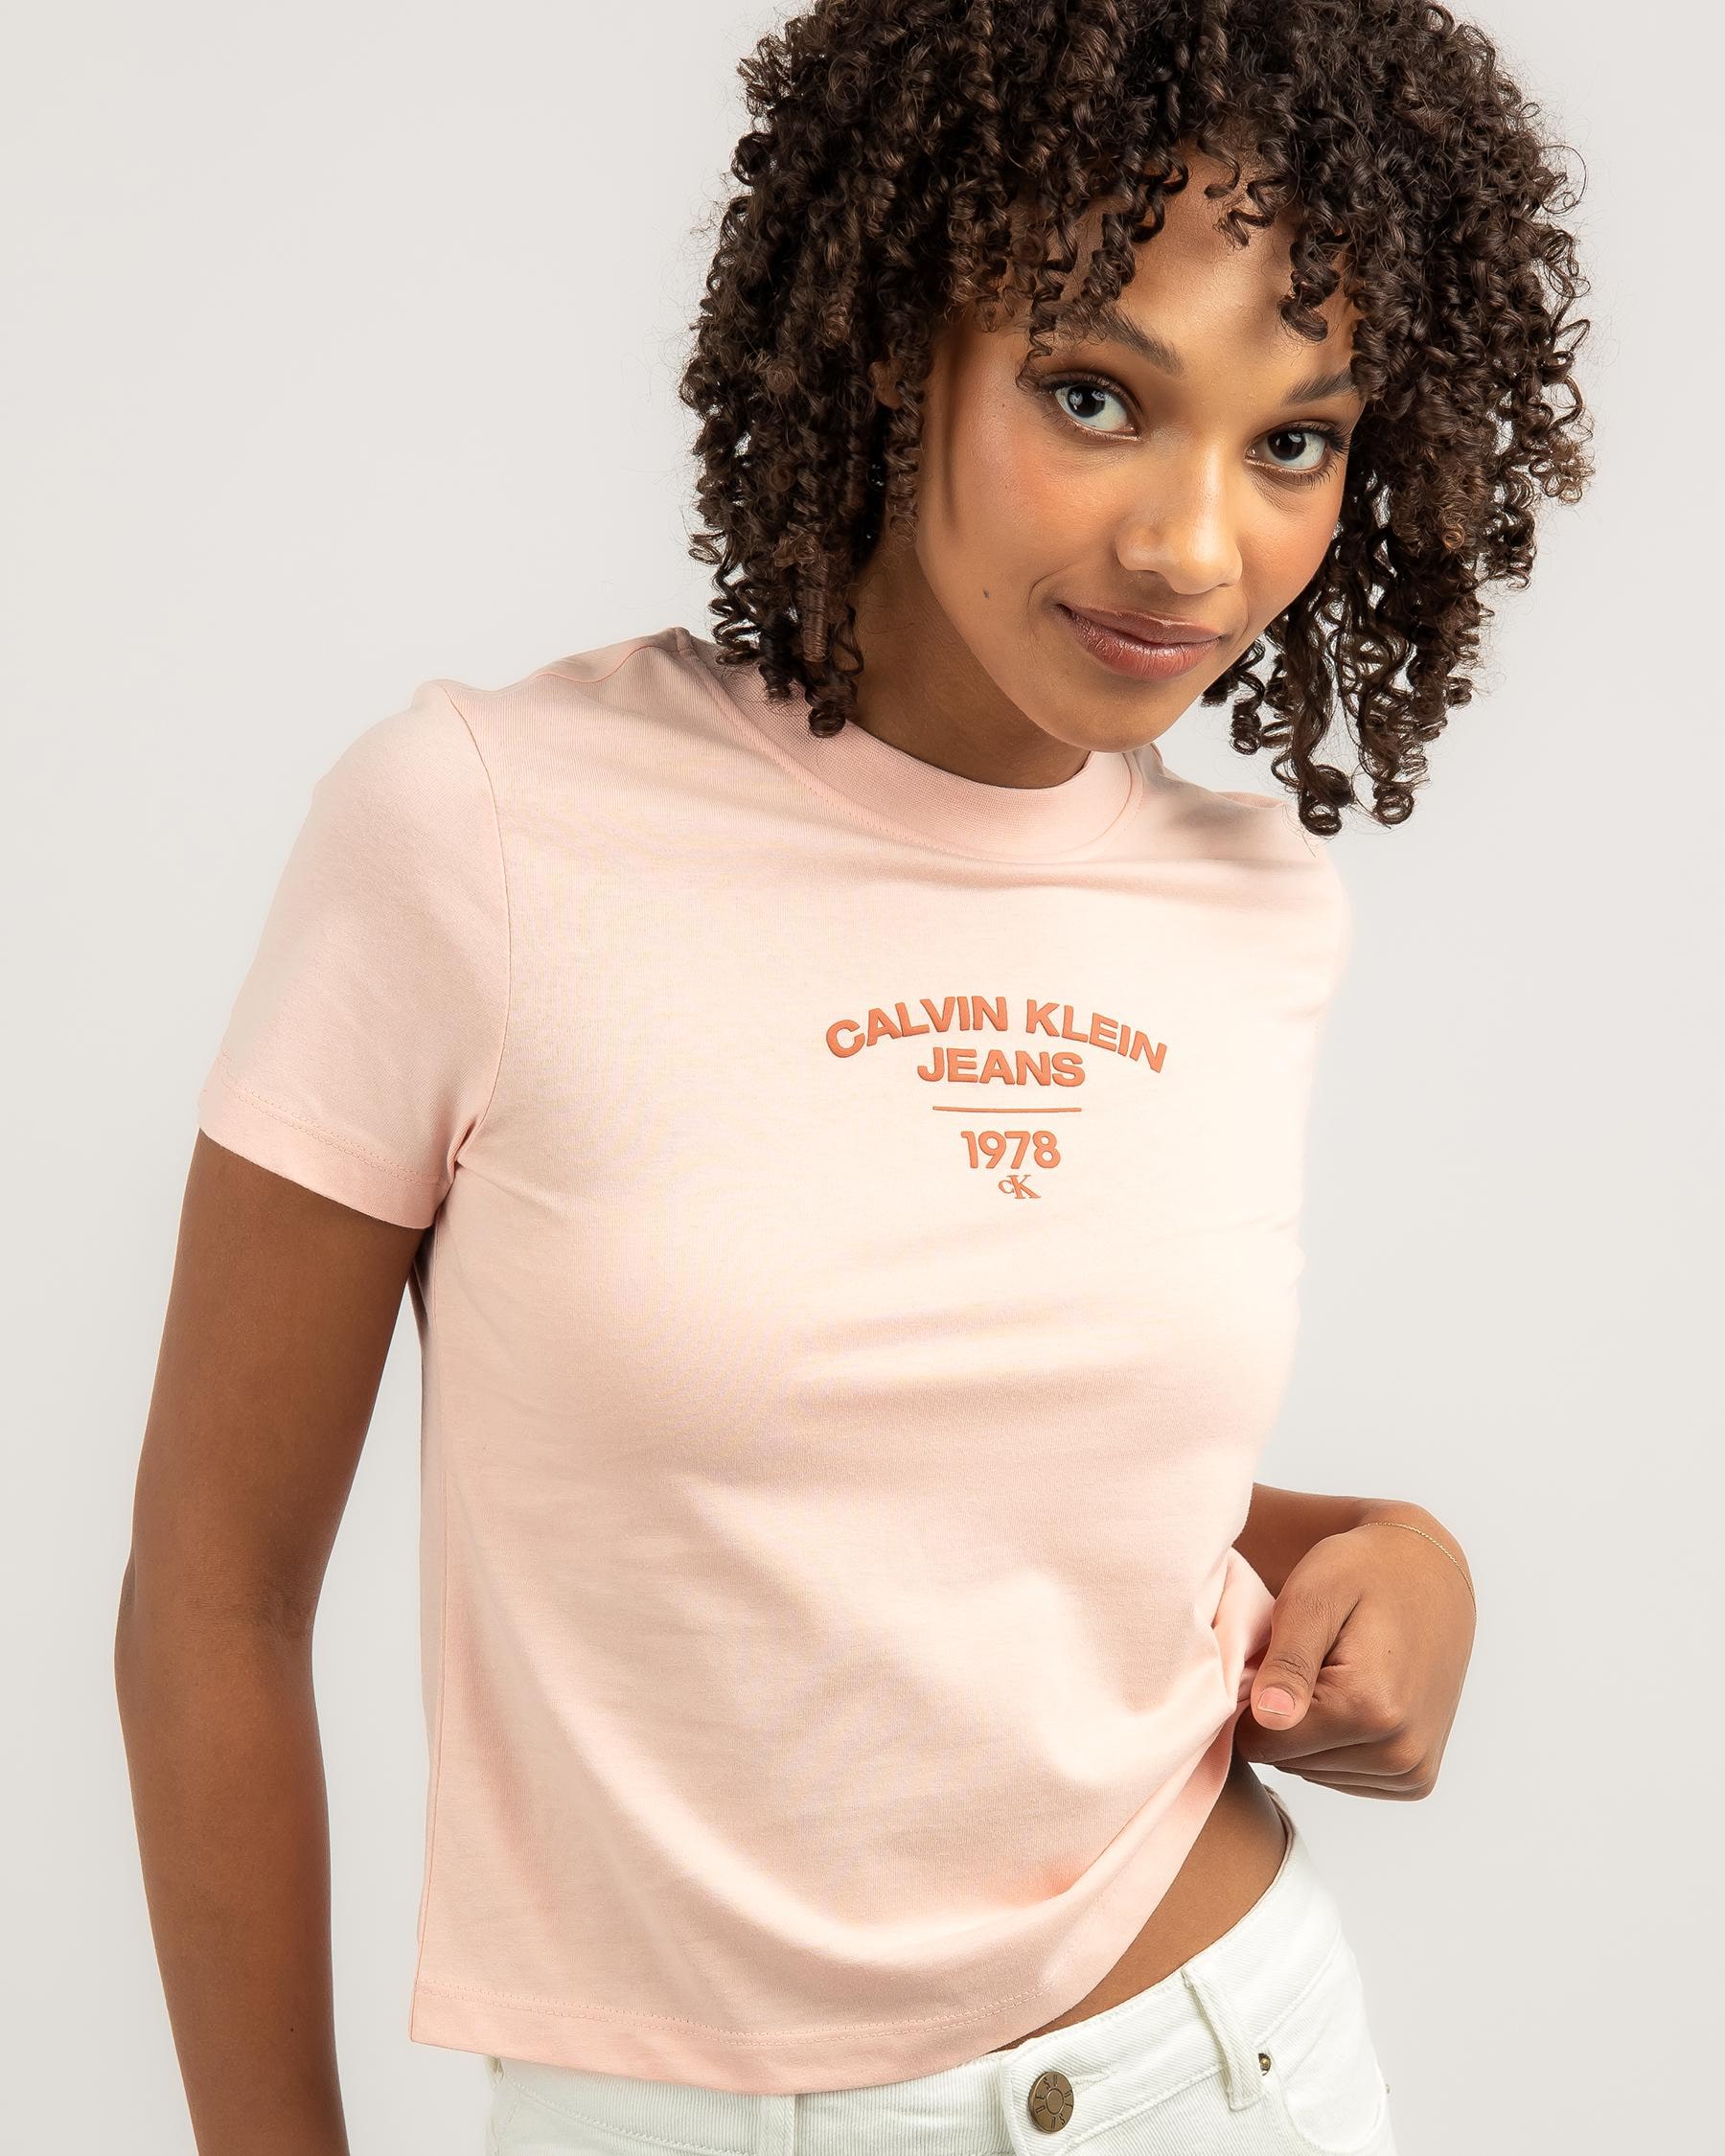 Calvin Klein Tee - Shipping Varsity Easy Beach States Jeans Returns - In Blossom Faint & Logo City FREE* Baby United